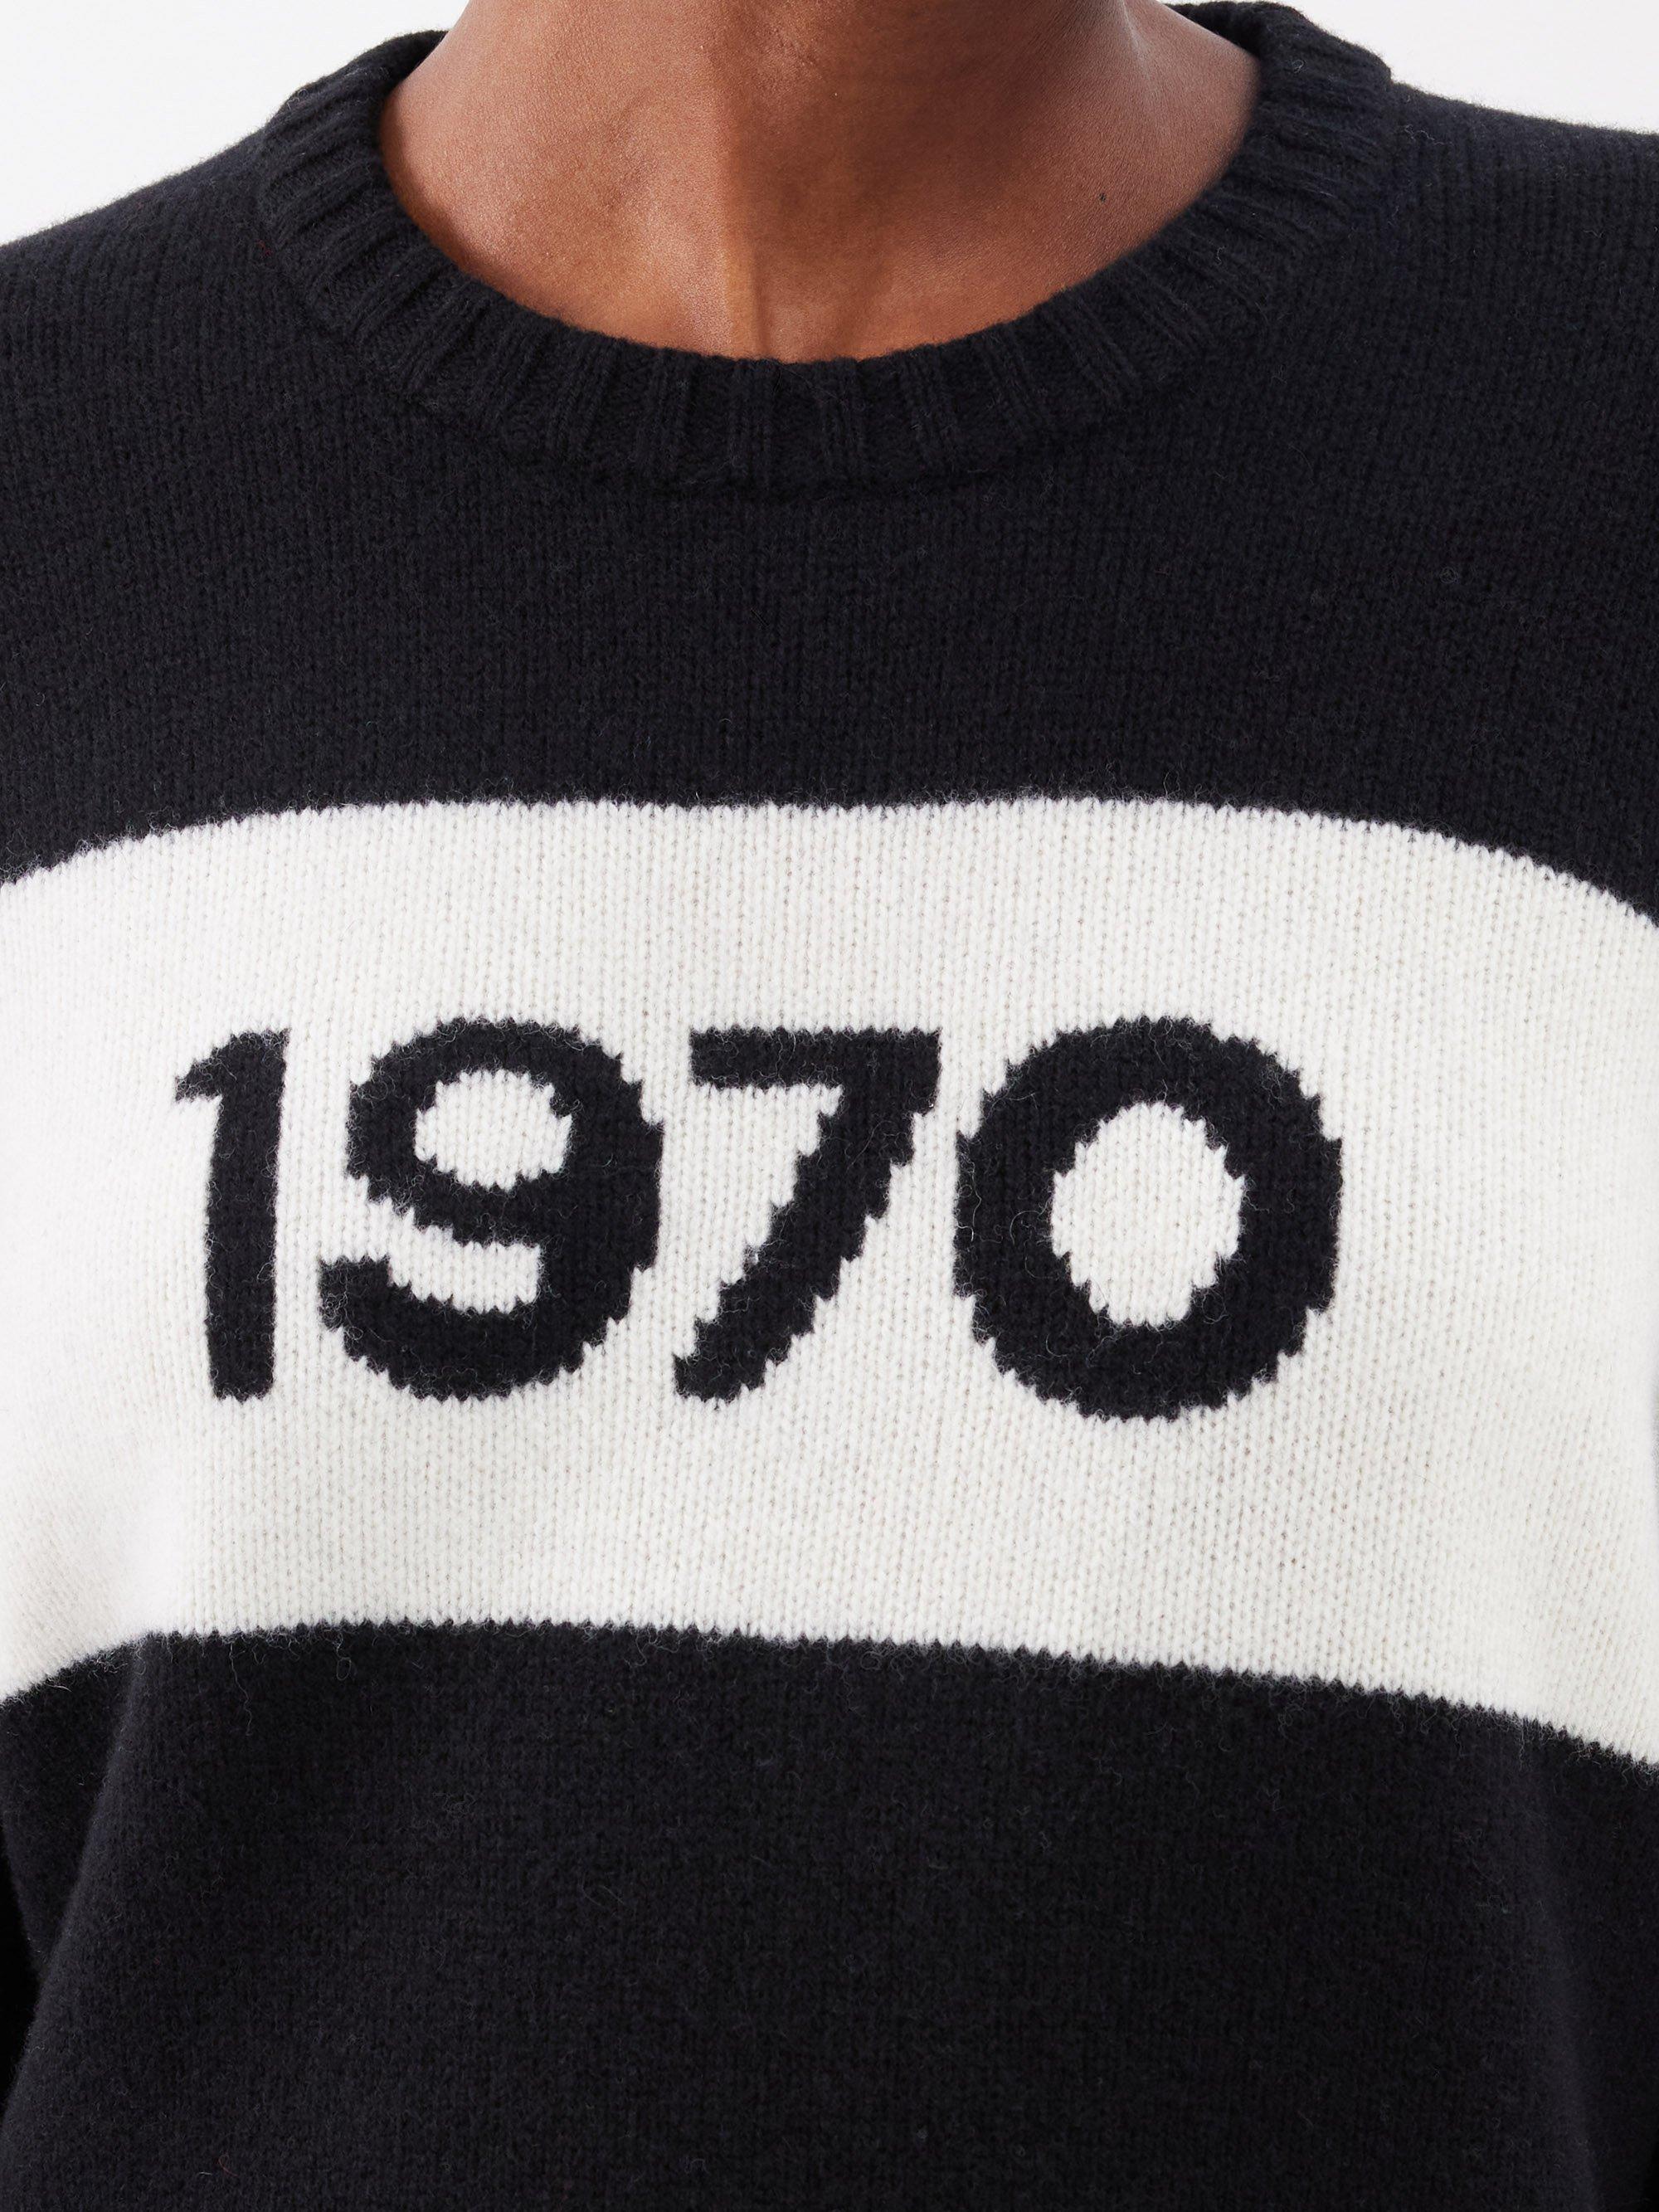 Bella Freud 1970-intarsia Merino Crew-neck Sweater in Black | Lyst